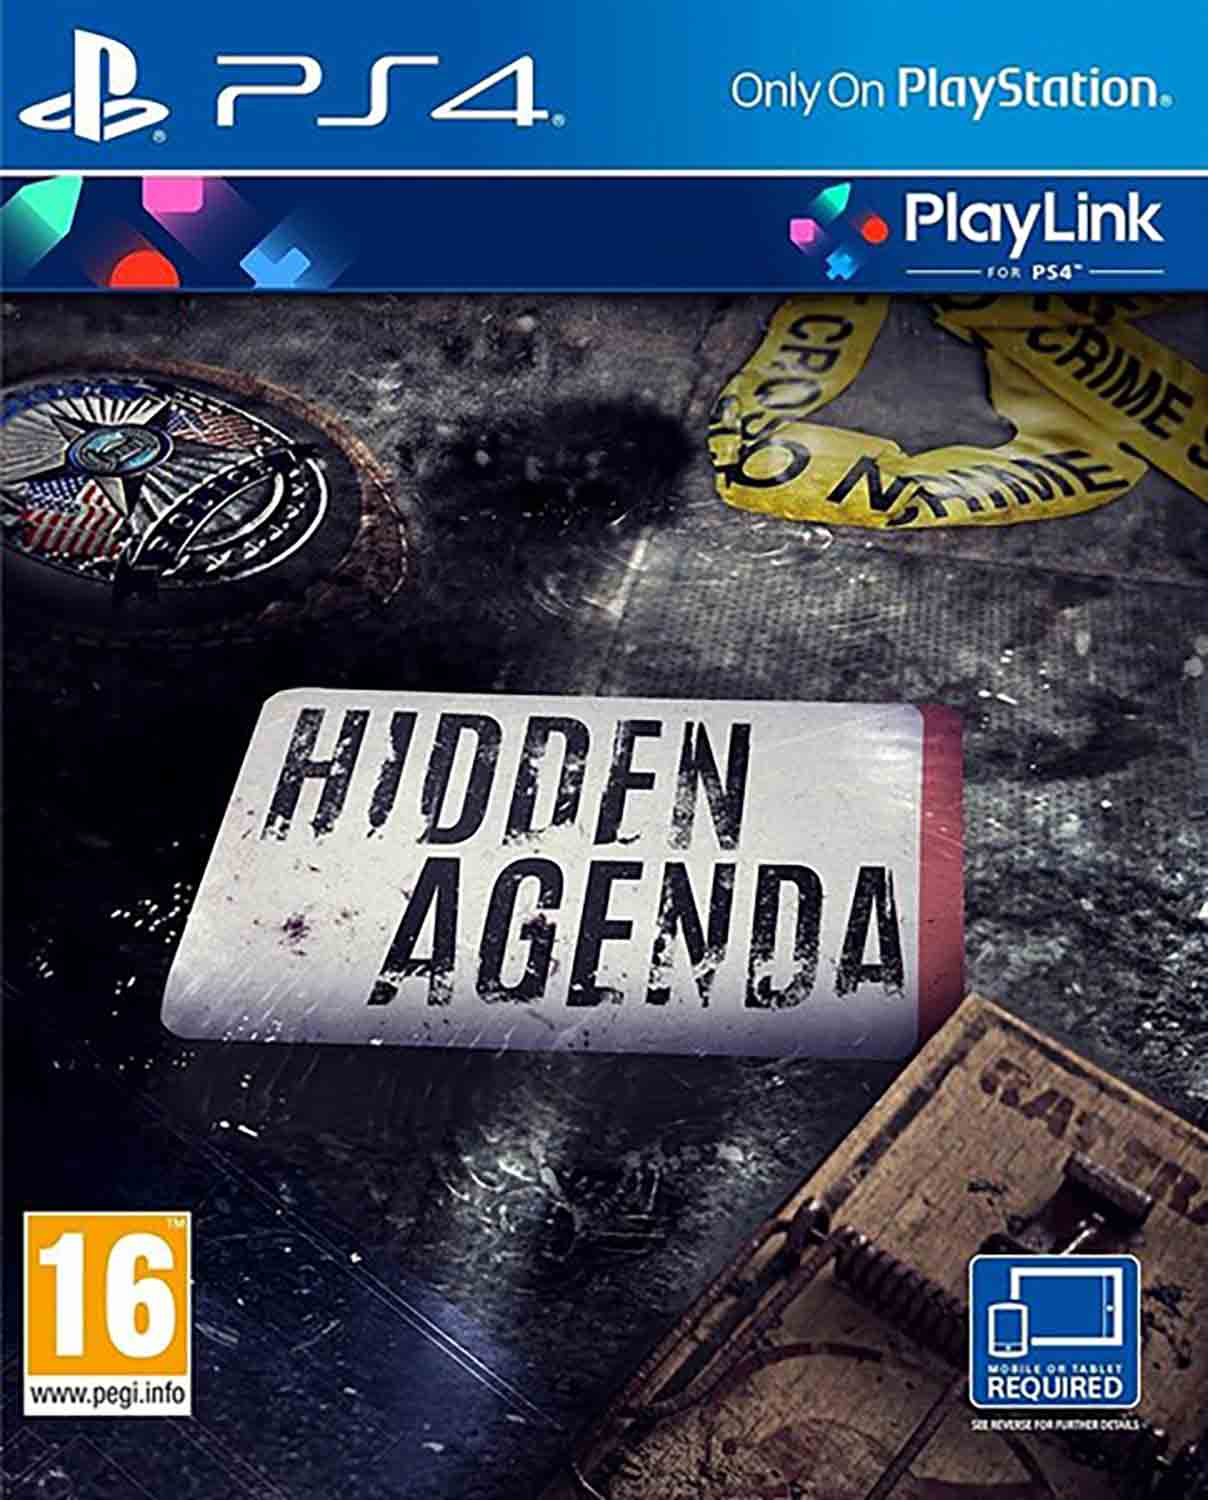 Hra Hidden Agenda CZ pro PS4 Playstation 4 konzole